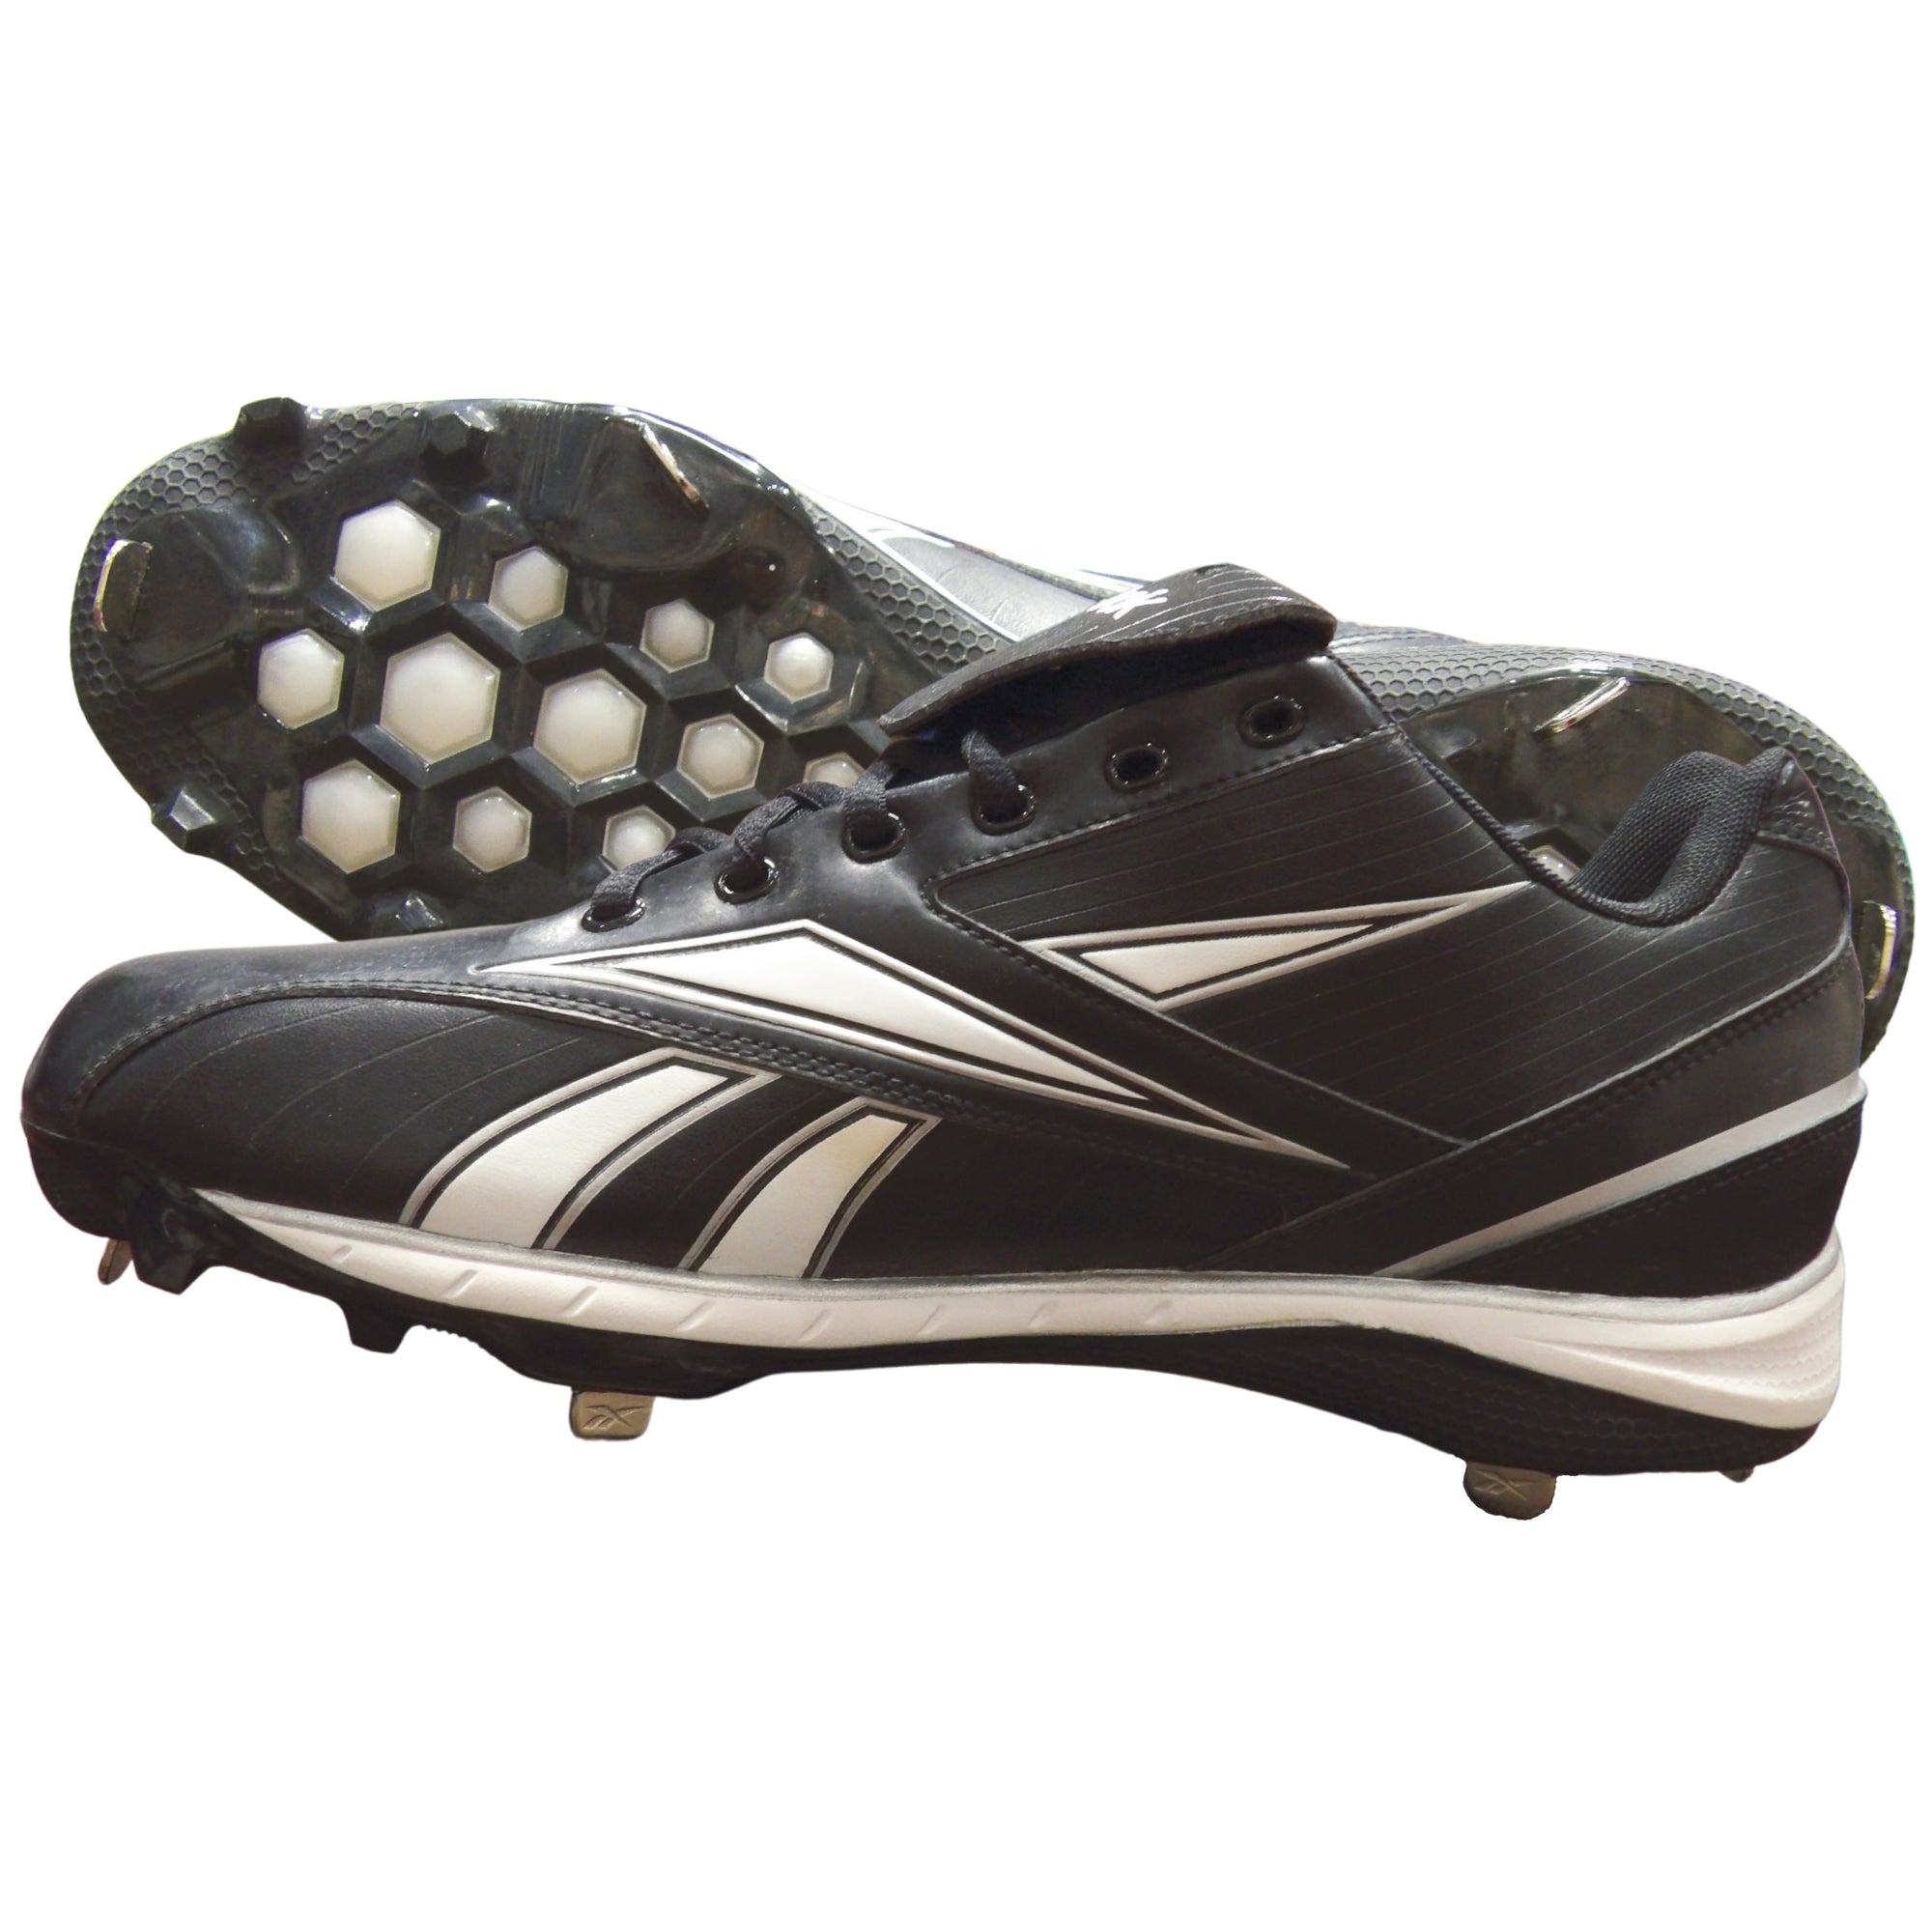 Reebok Cricket Shoes, Model HexRide - White/Black